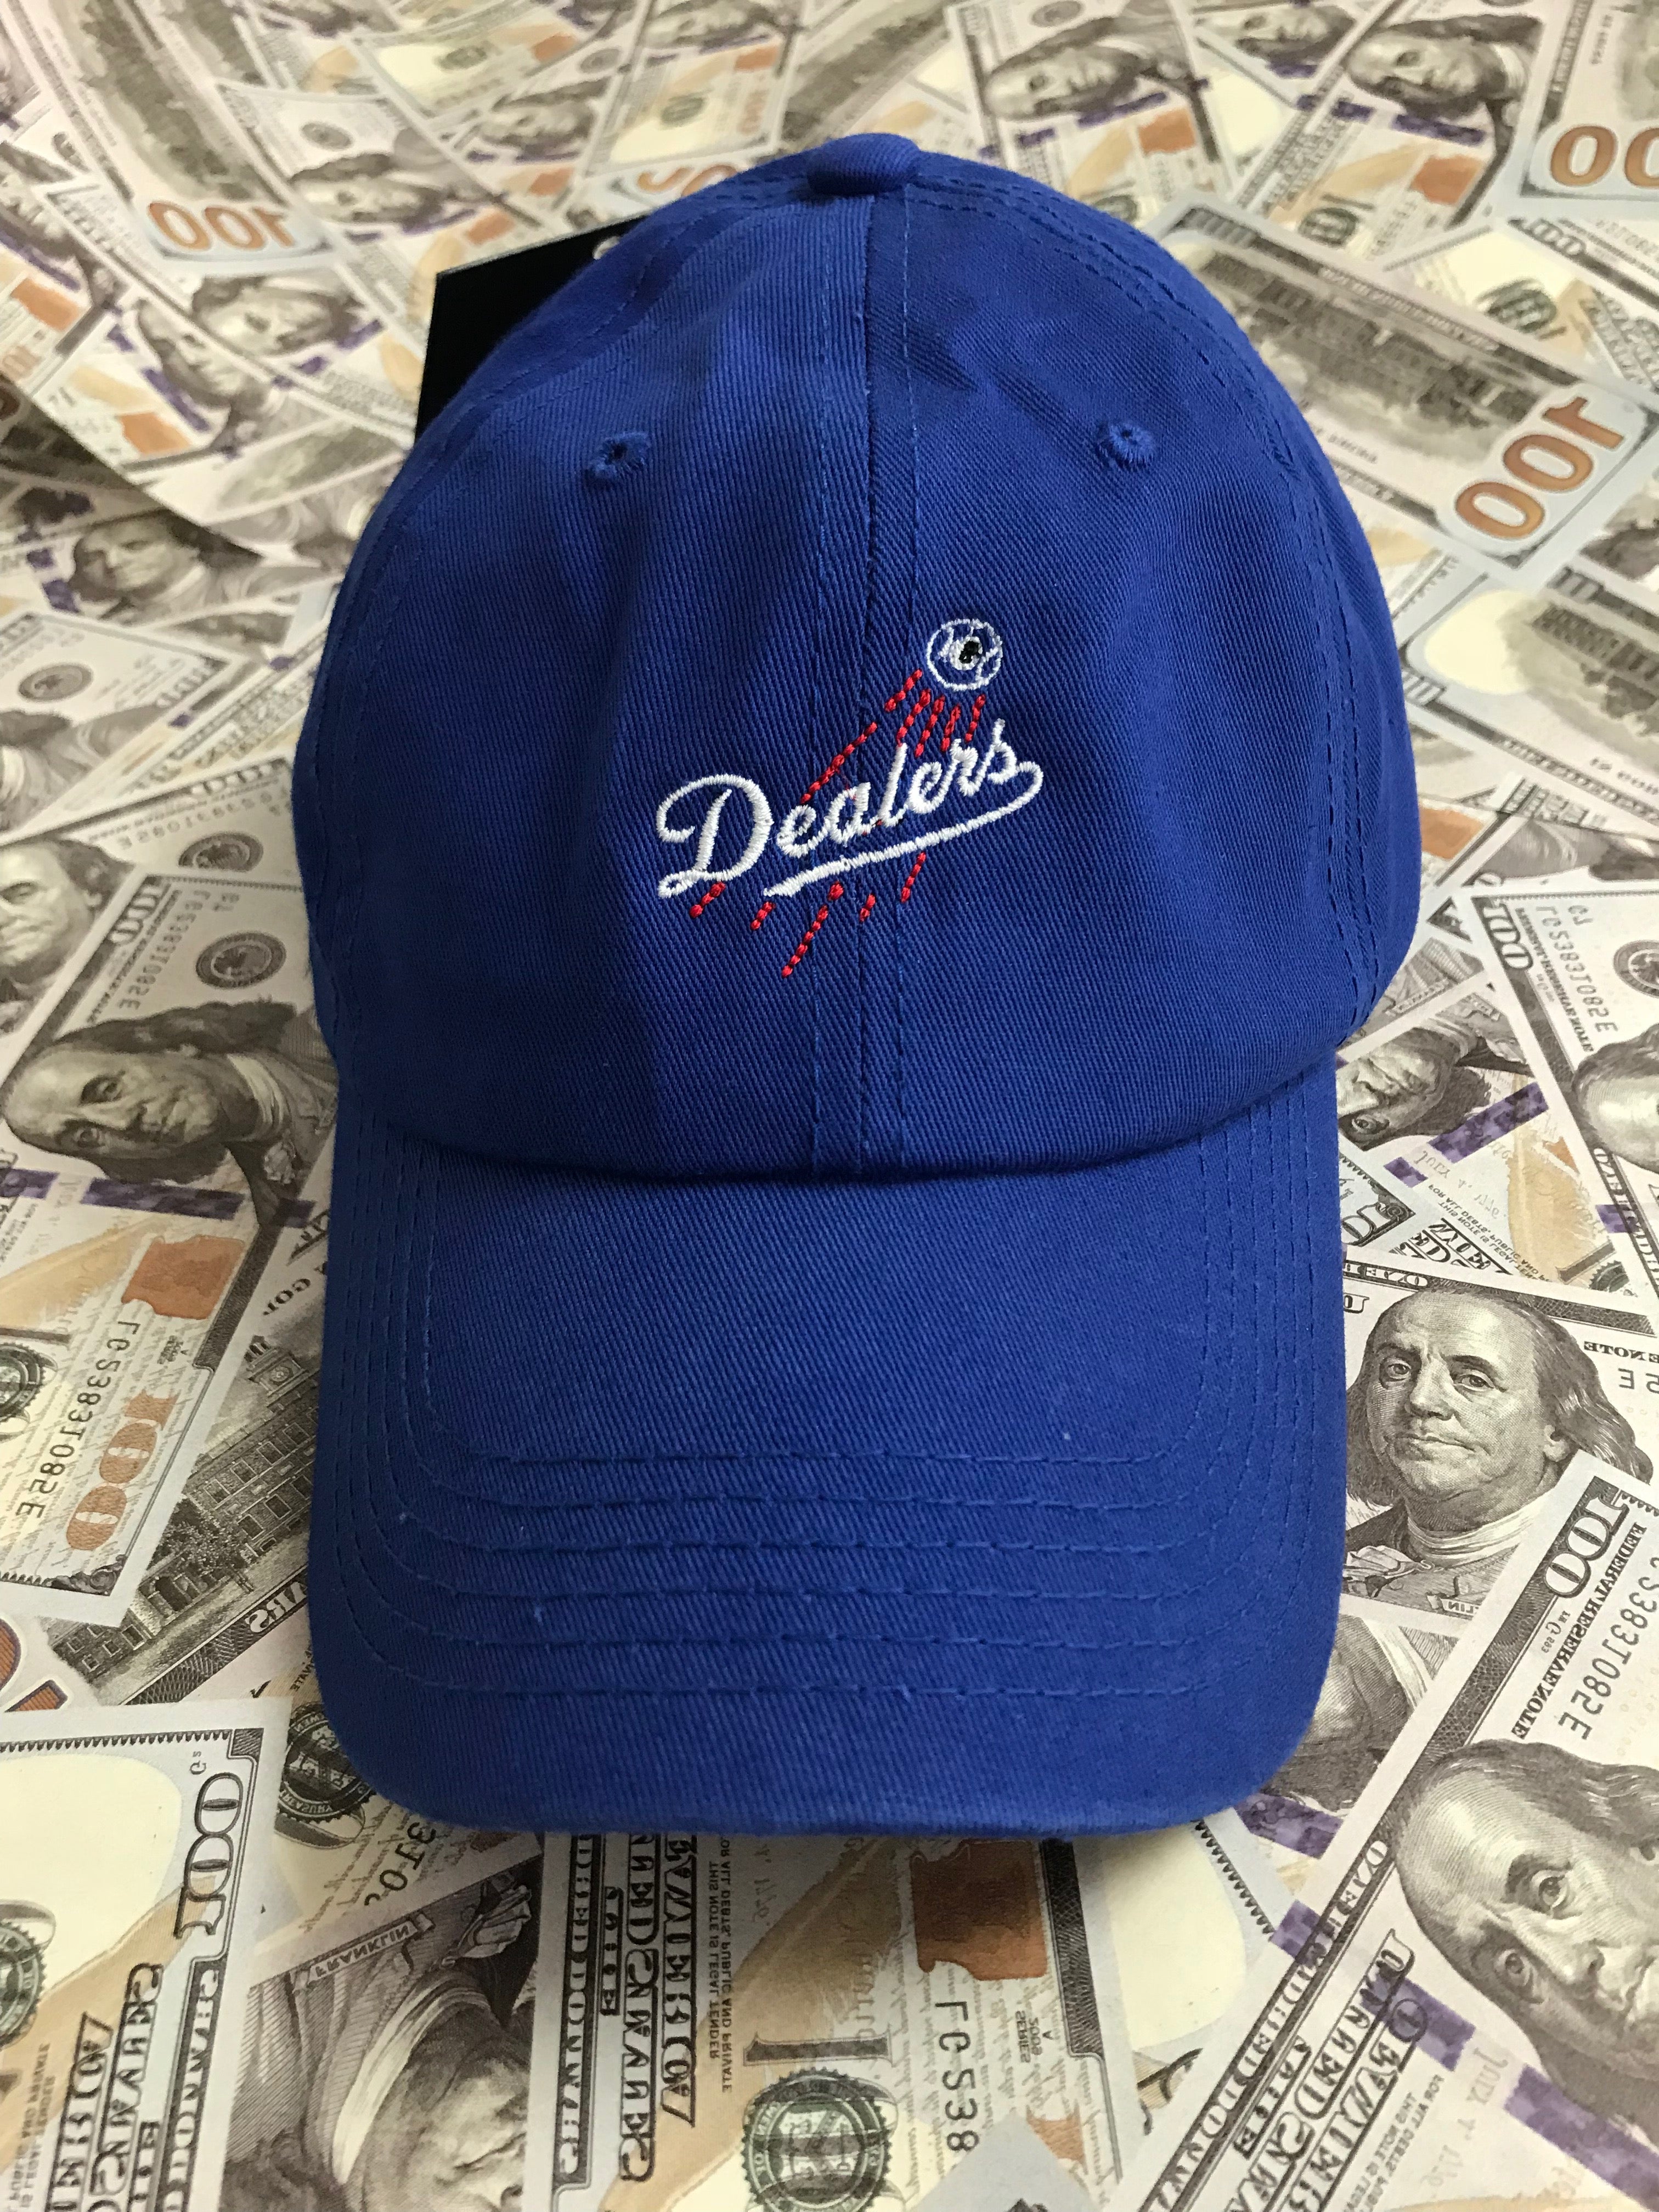 Dealers Dad Hat